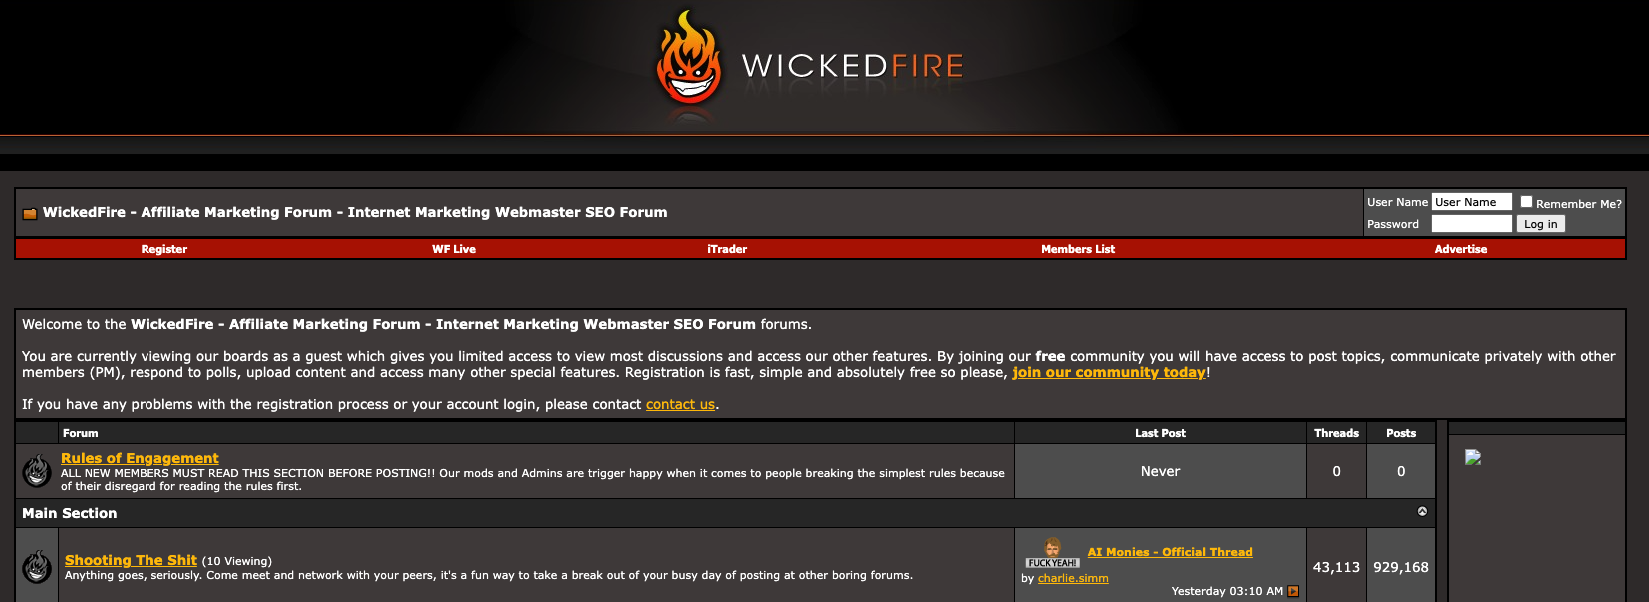 wicked fire affiliate marketing forum